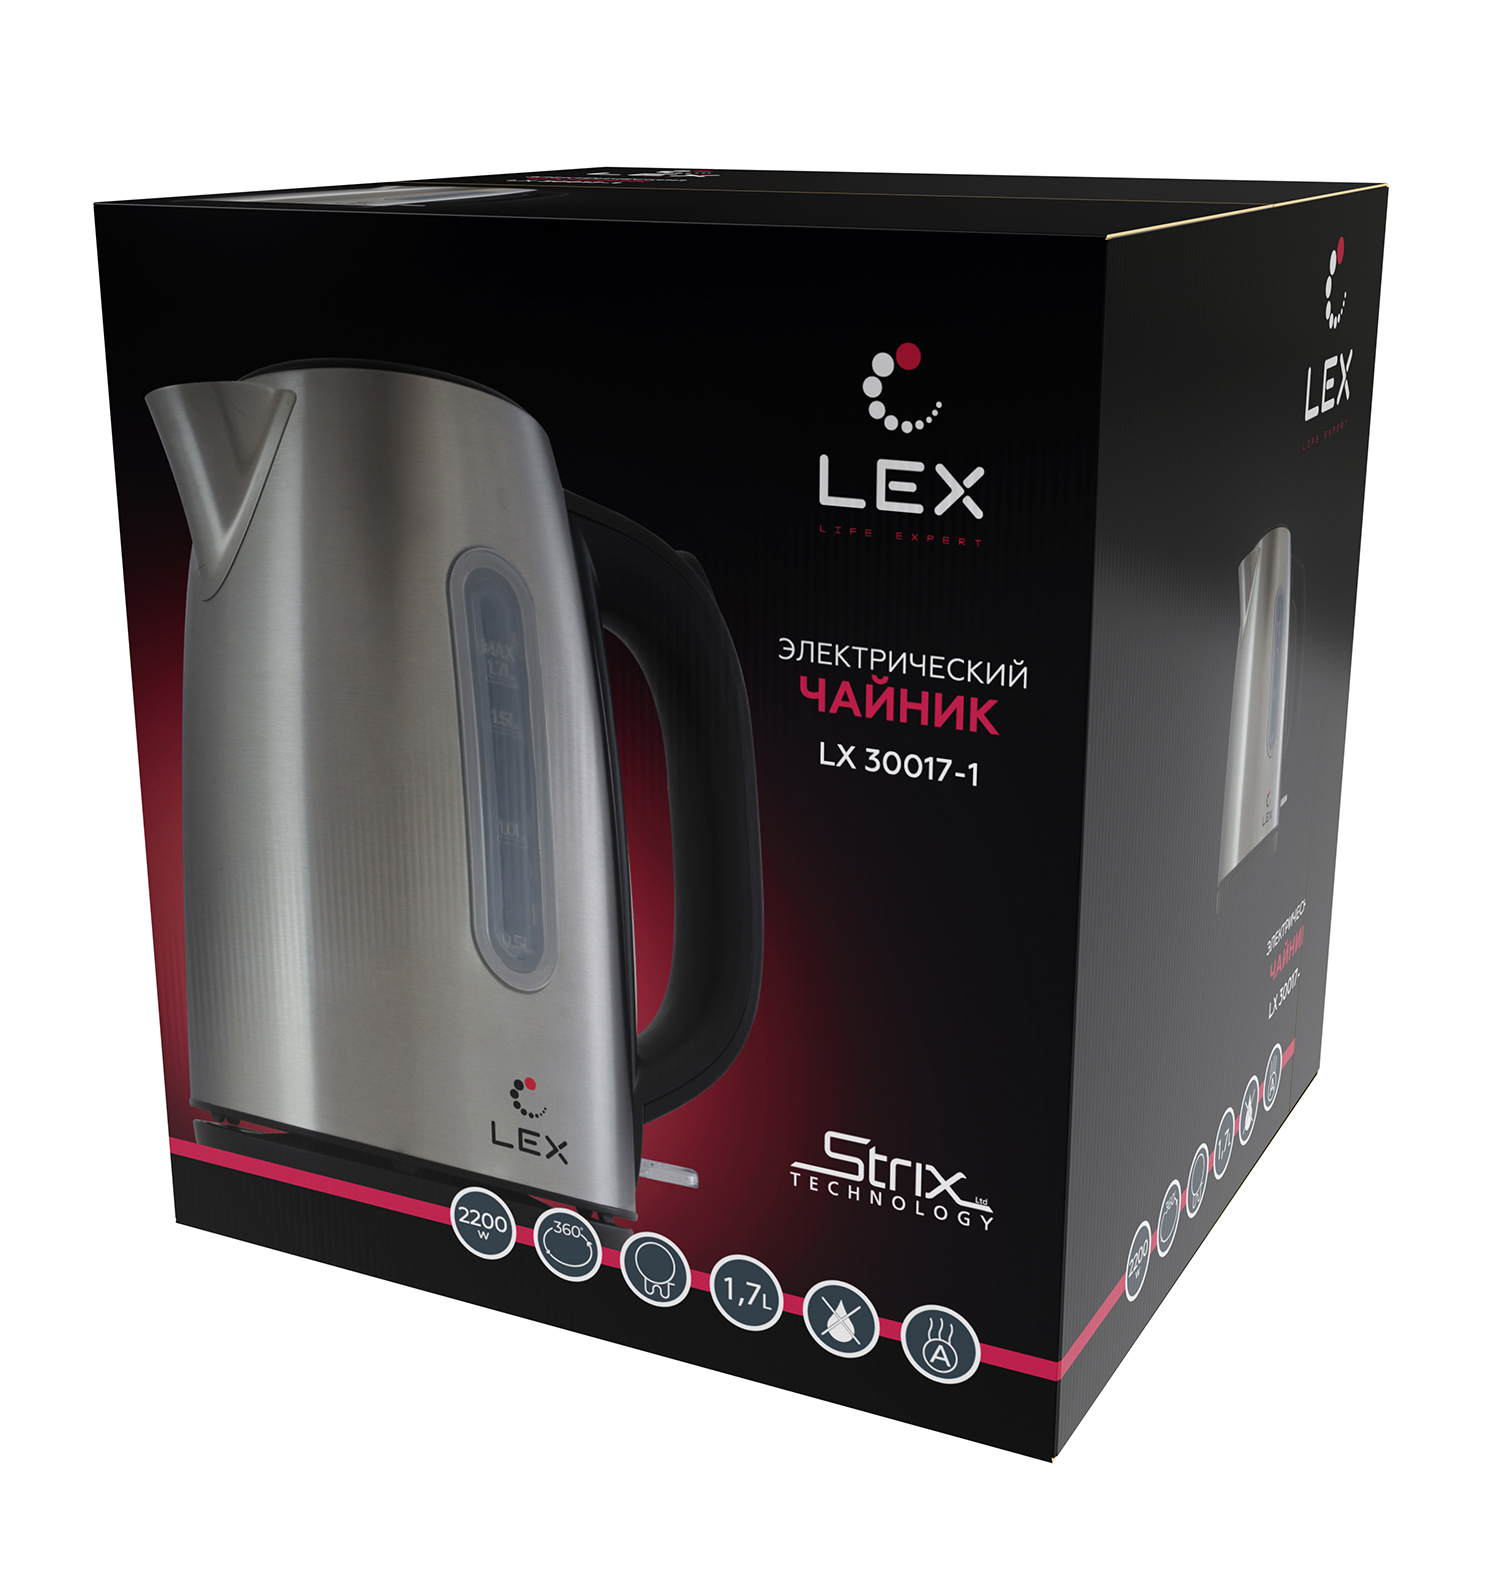 LEX LX 30017-1